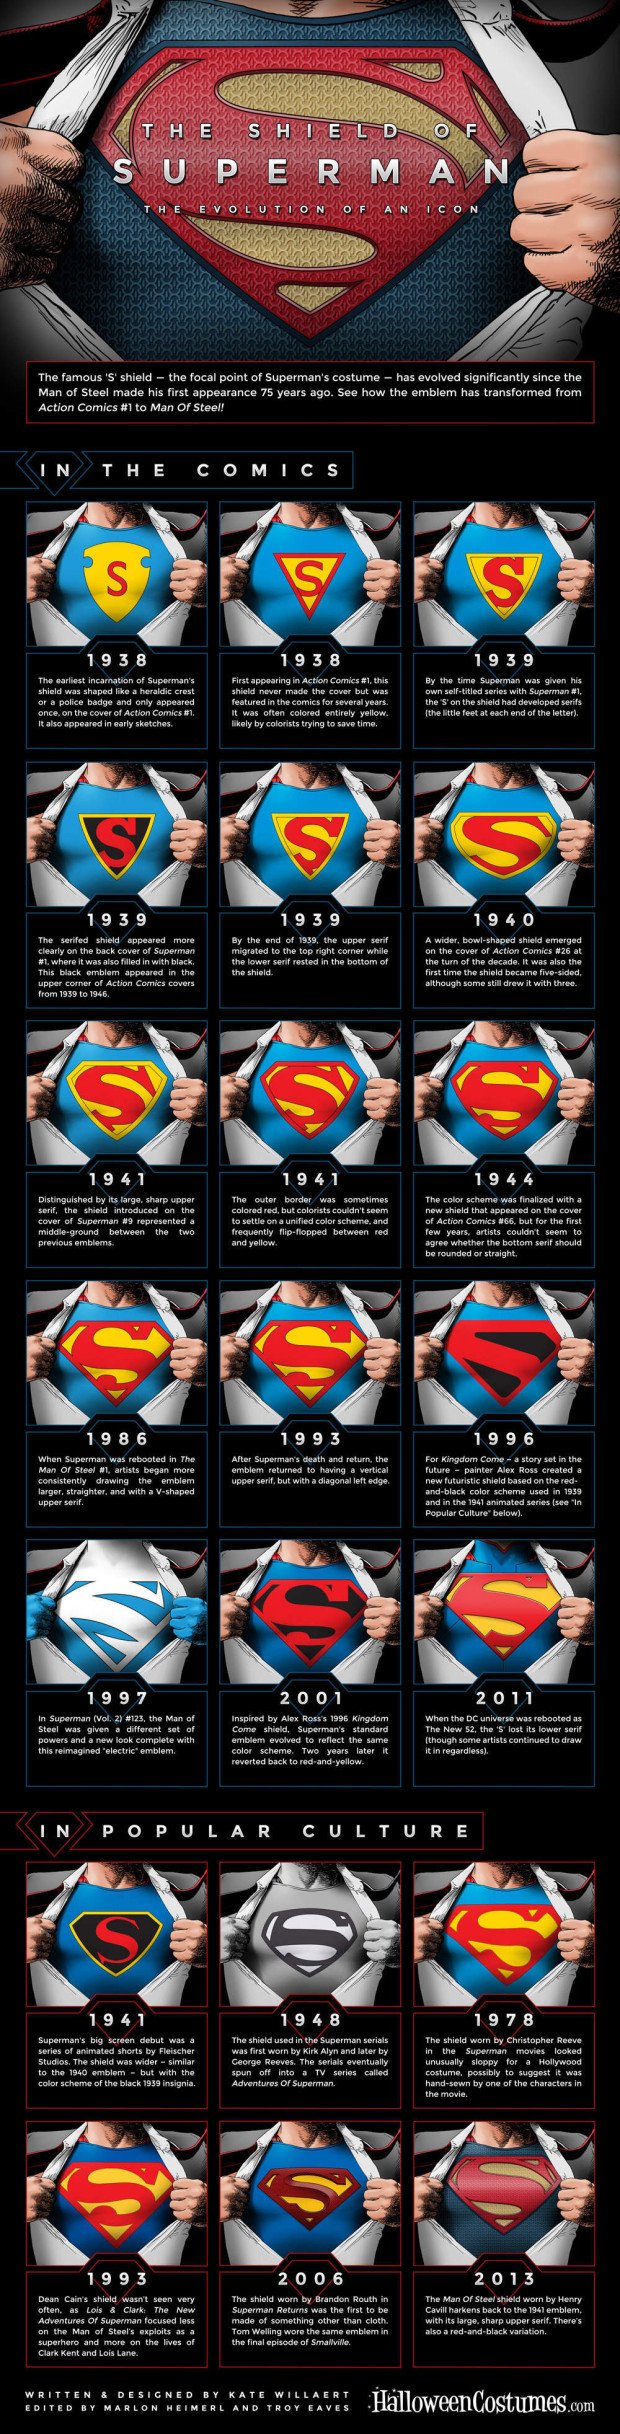 evolution-of-superman-logo-infographic